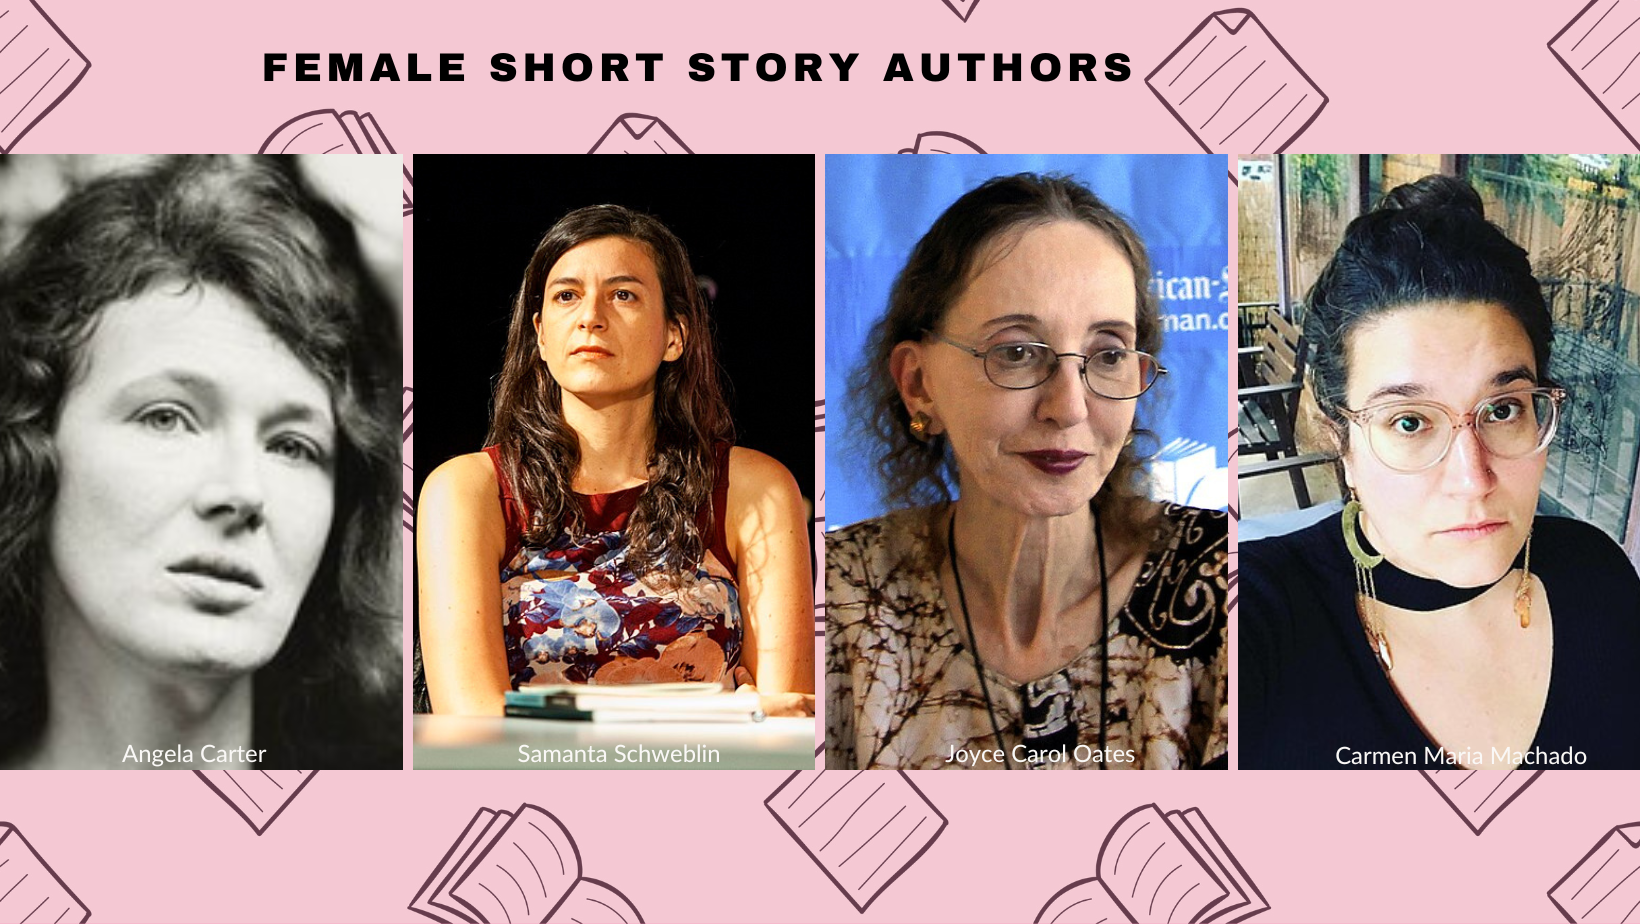 Authors Angela Carter, Samanta Schweblin, Joyce Carol Oates and Carmen Maria Machado.